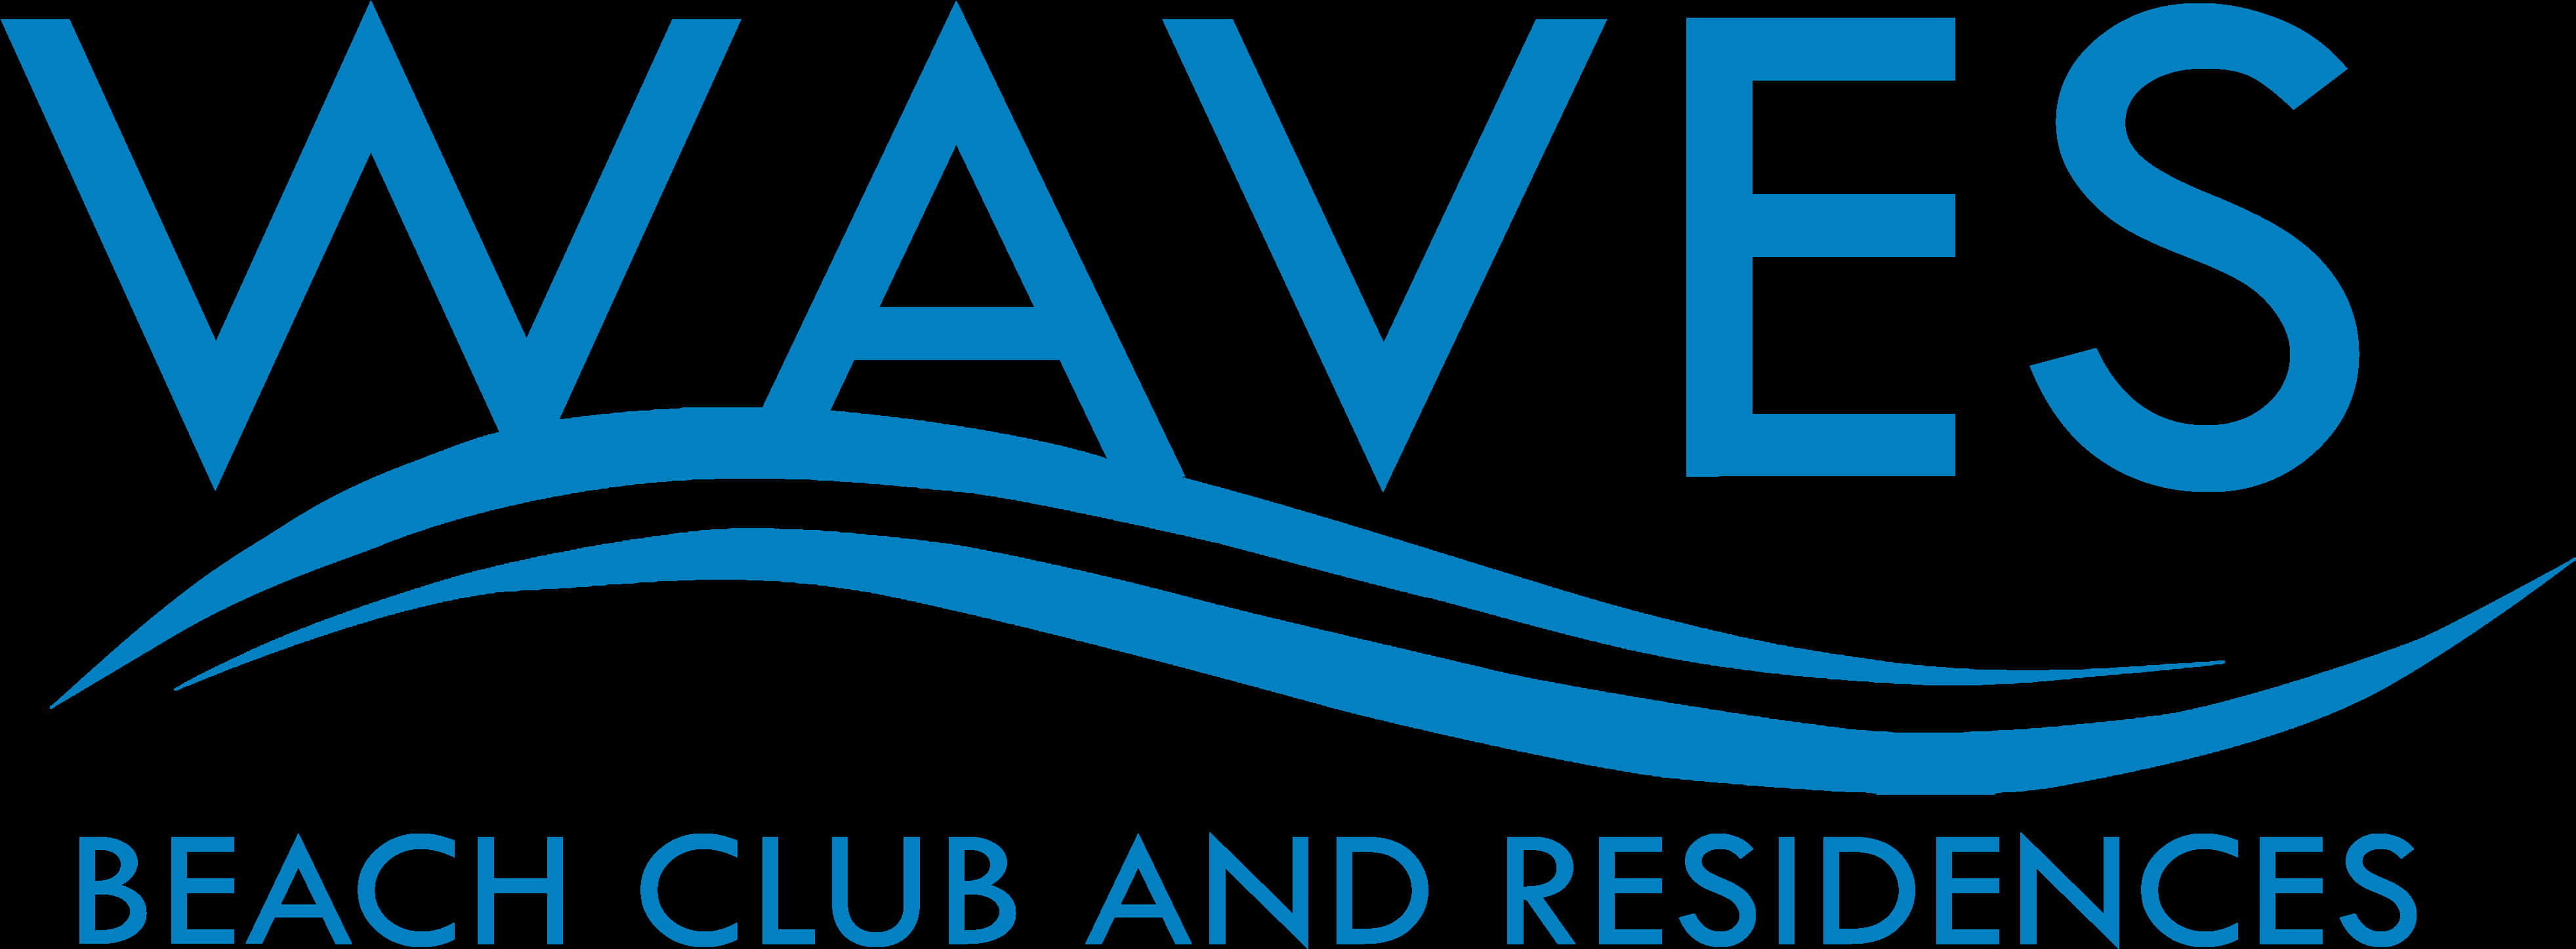 Waves Beach Club Residences Logo PNG